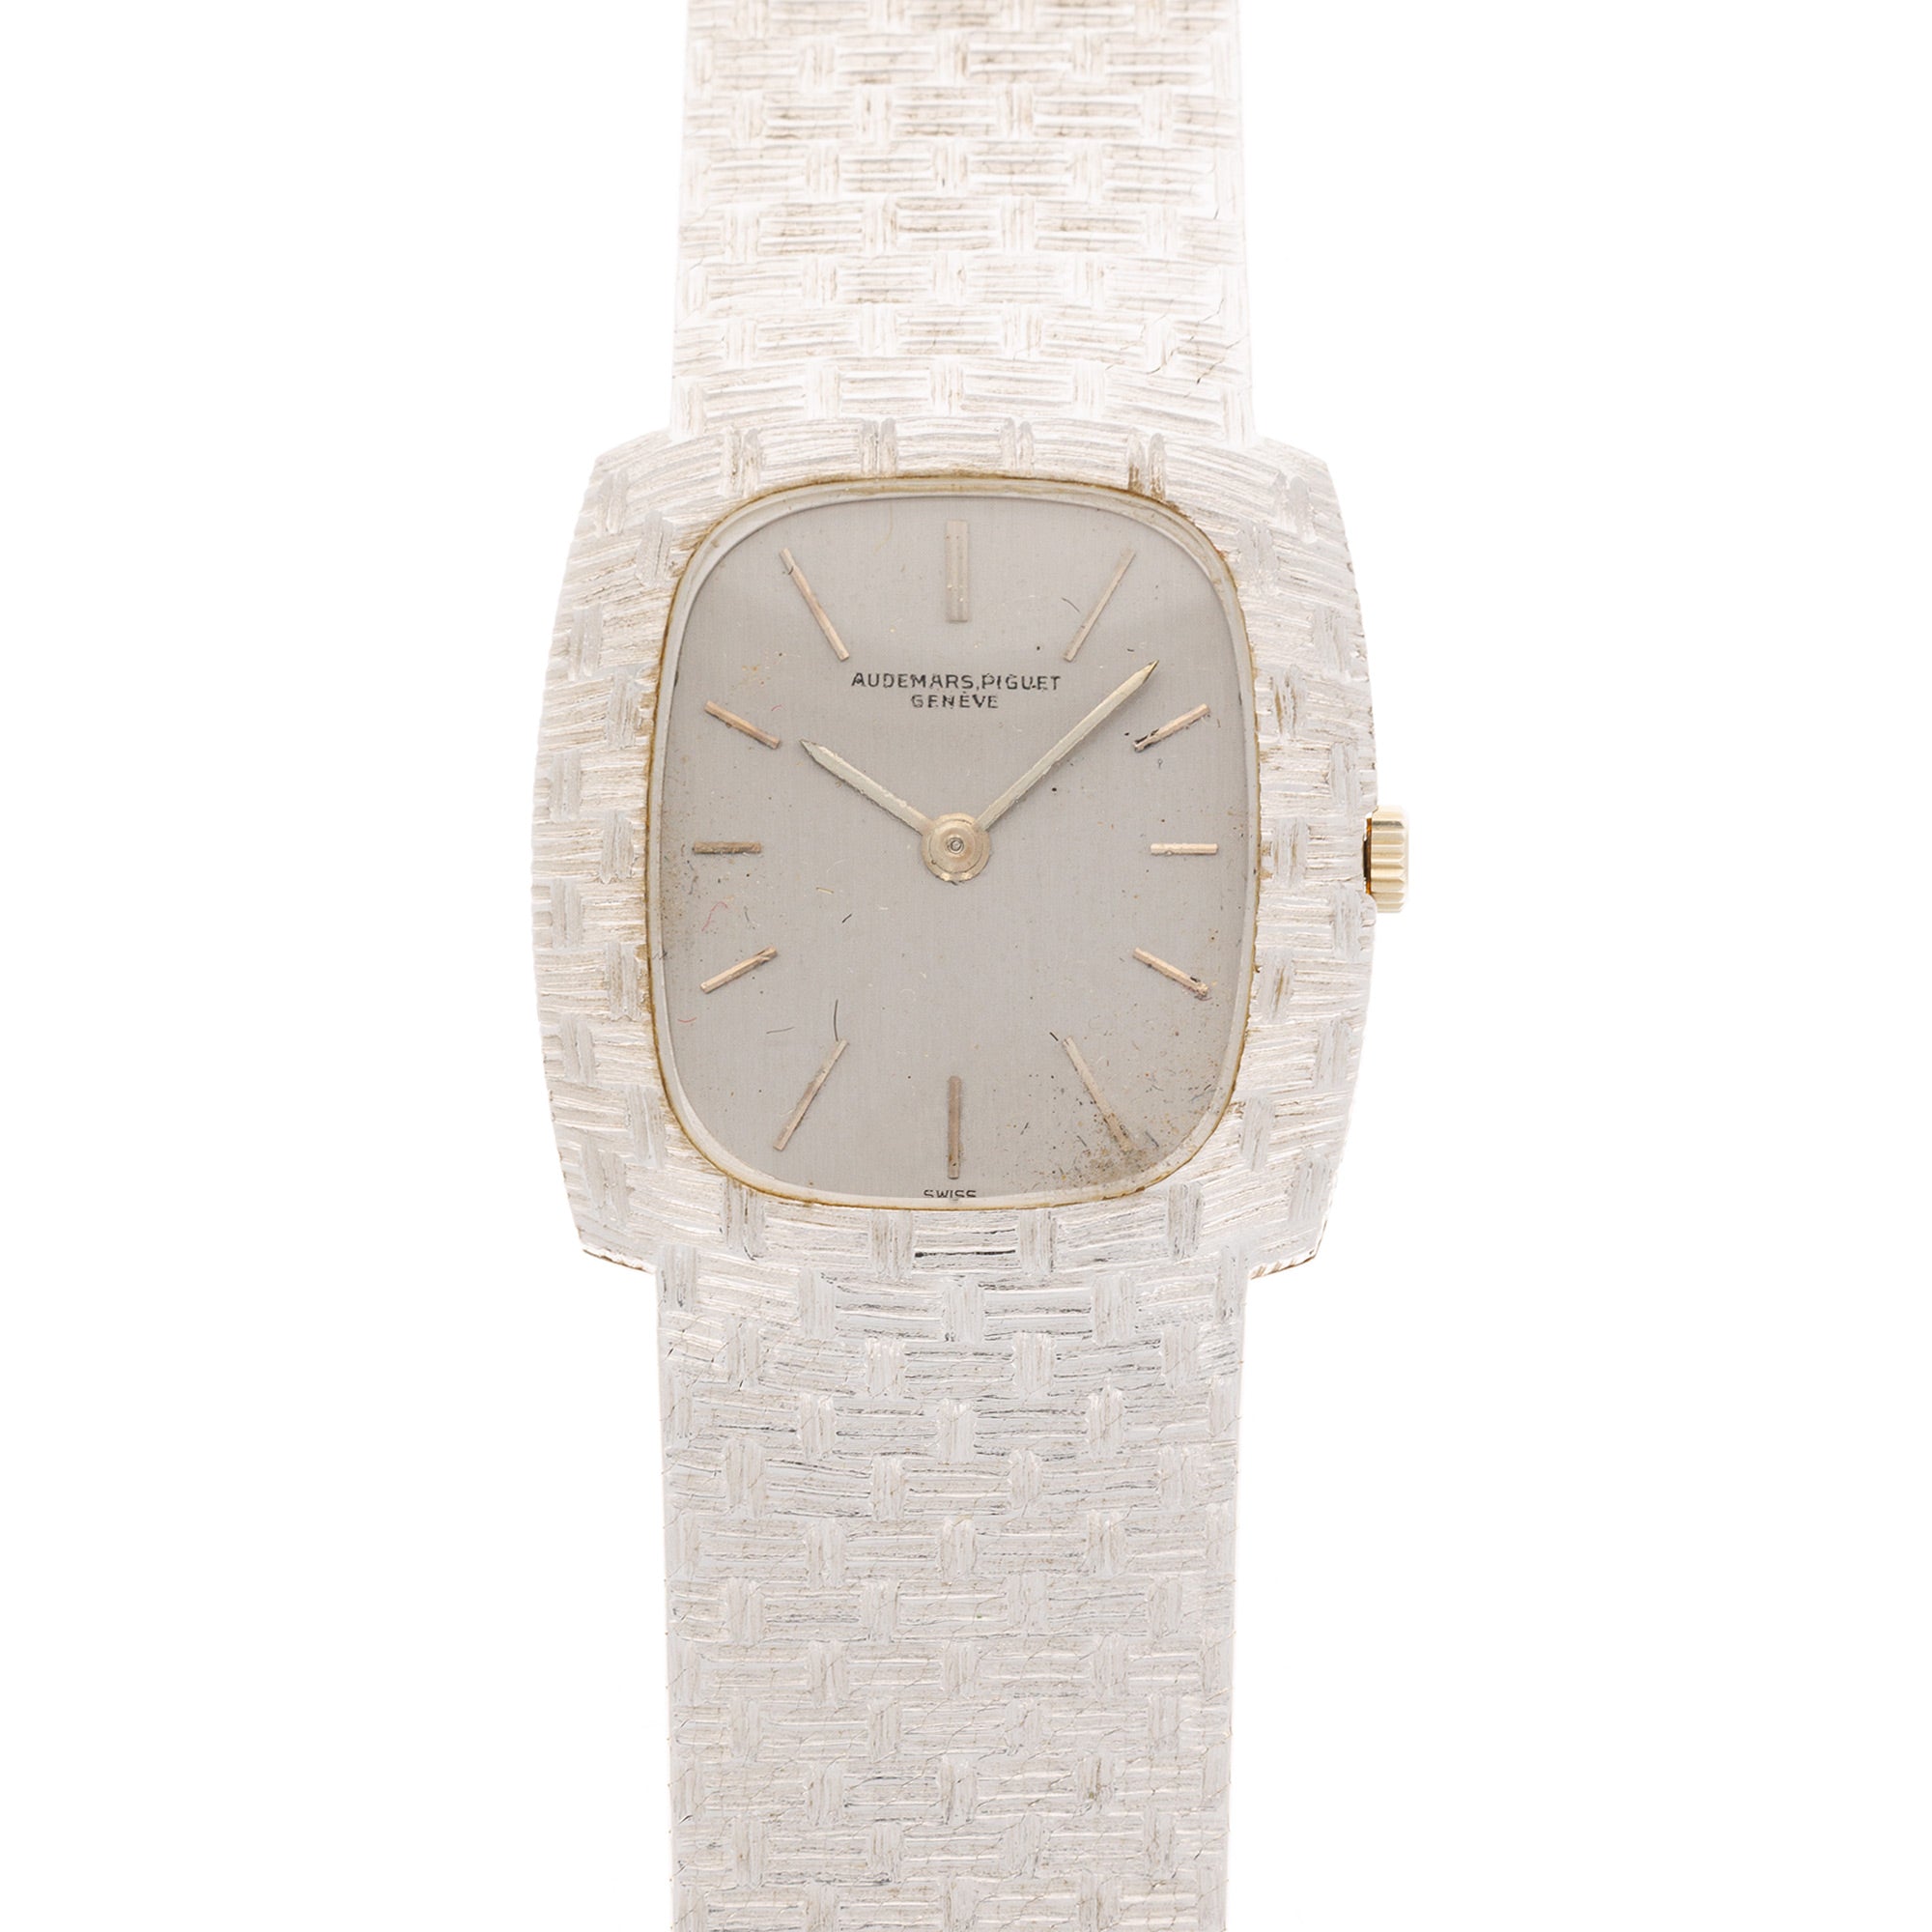 Audemars Piguet - Audemars Piguet White Gold Bracelet Watch with Original Box and Papers - The Keystone Watches